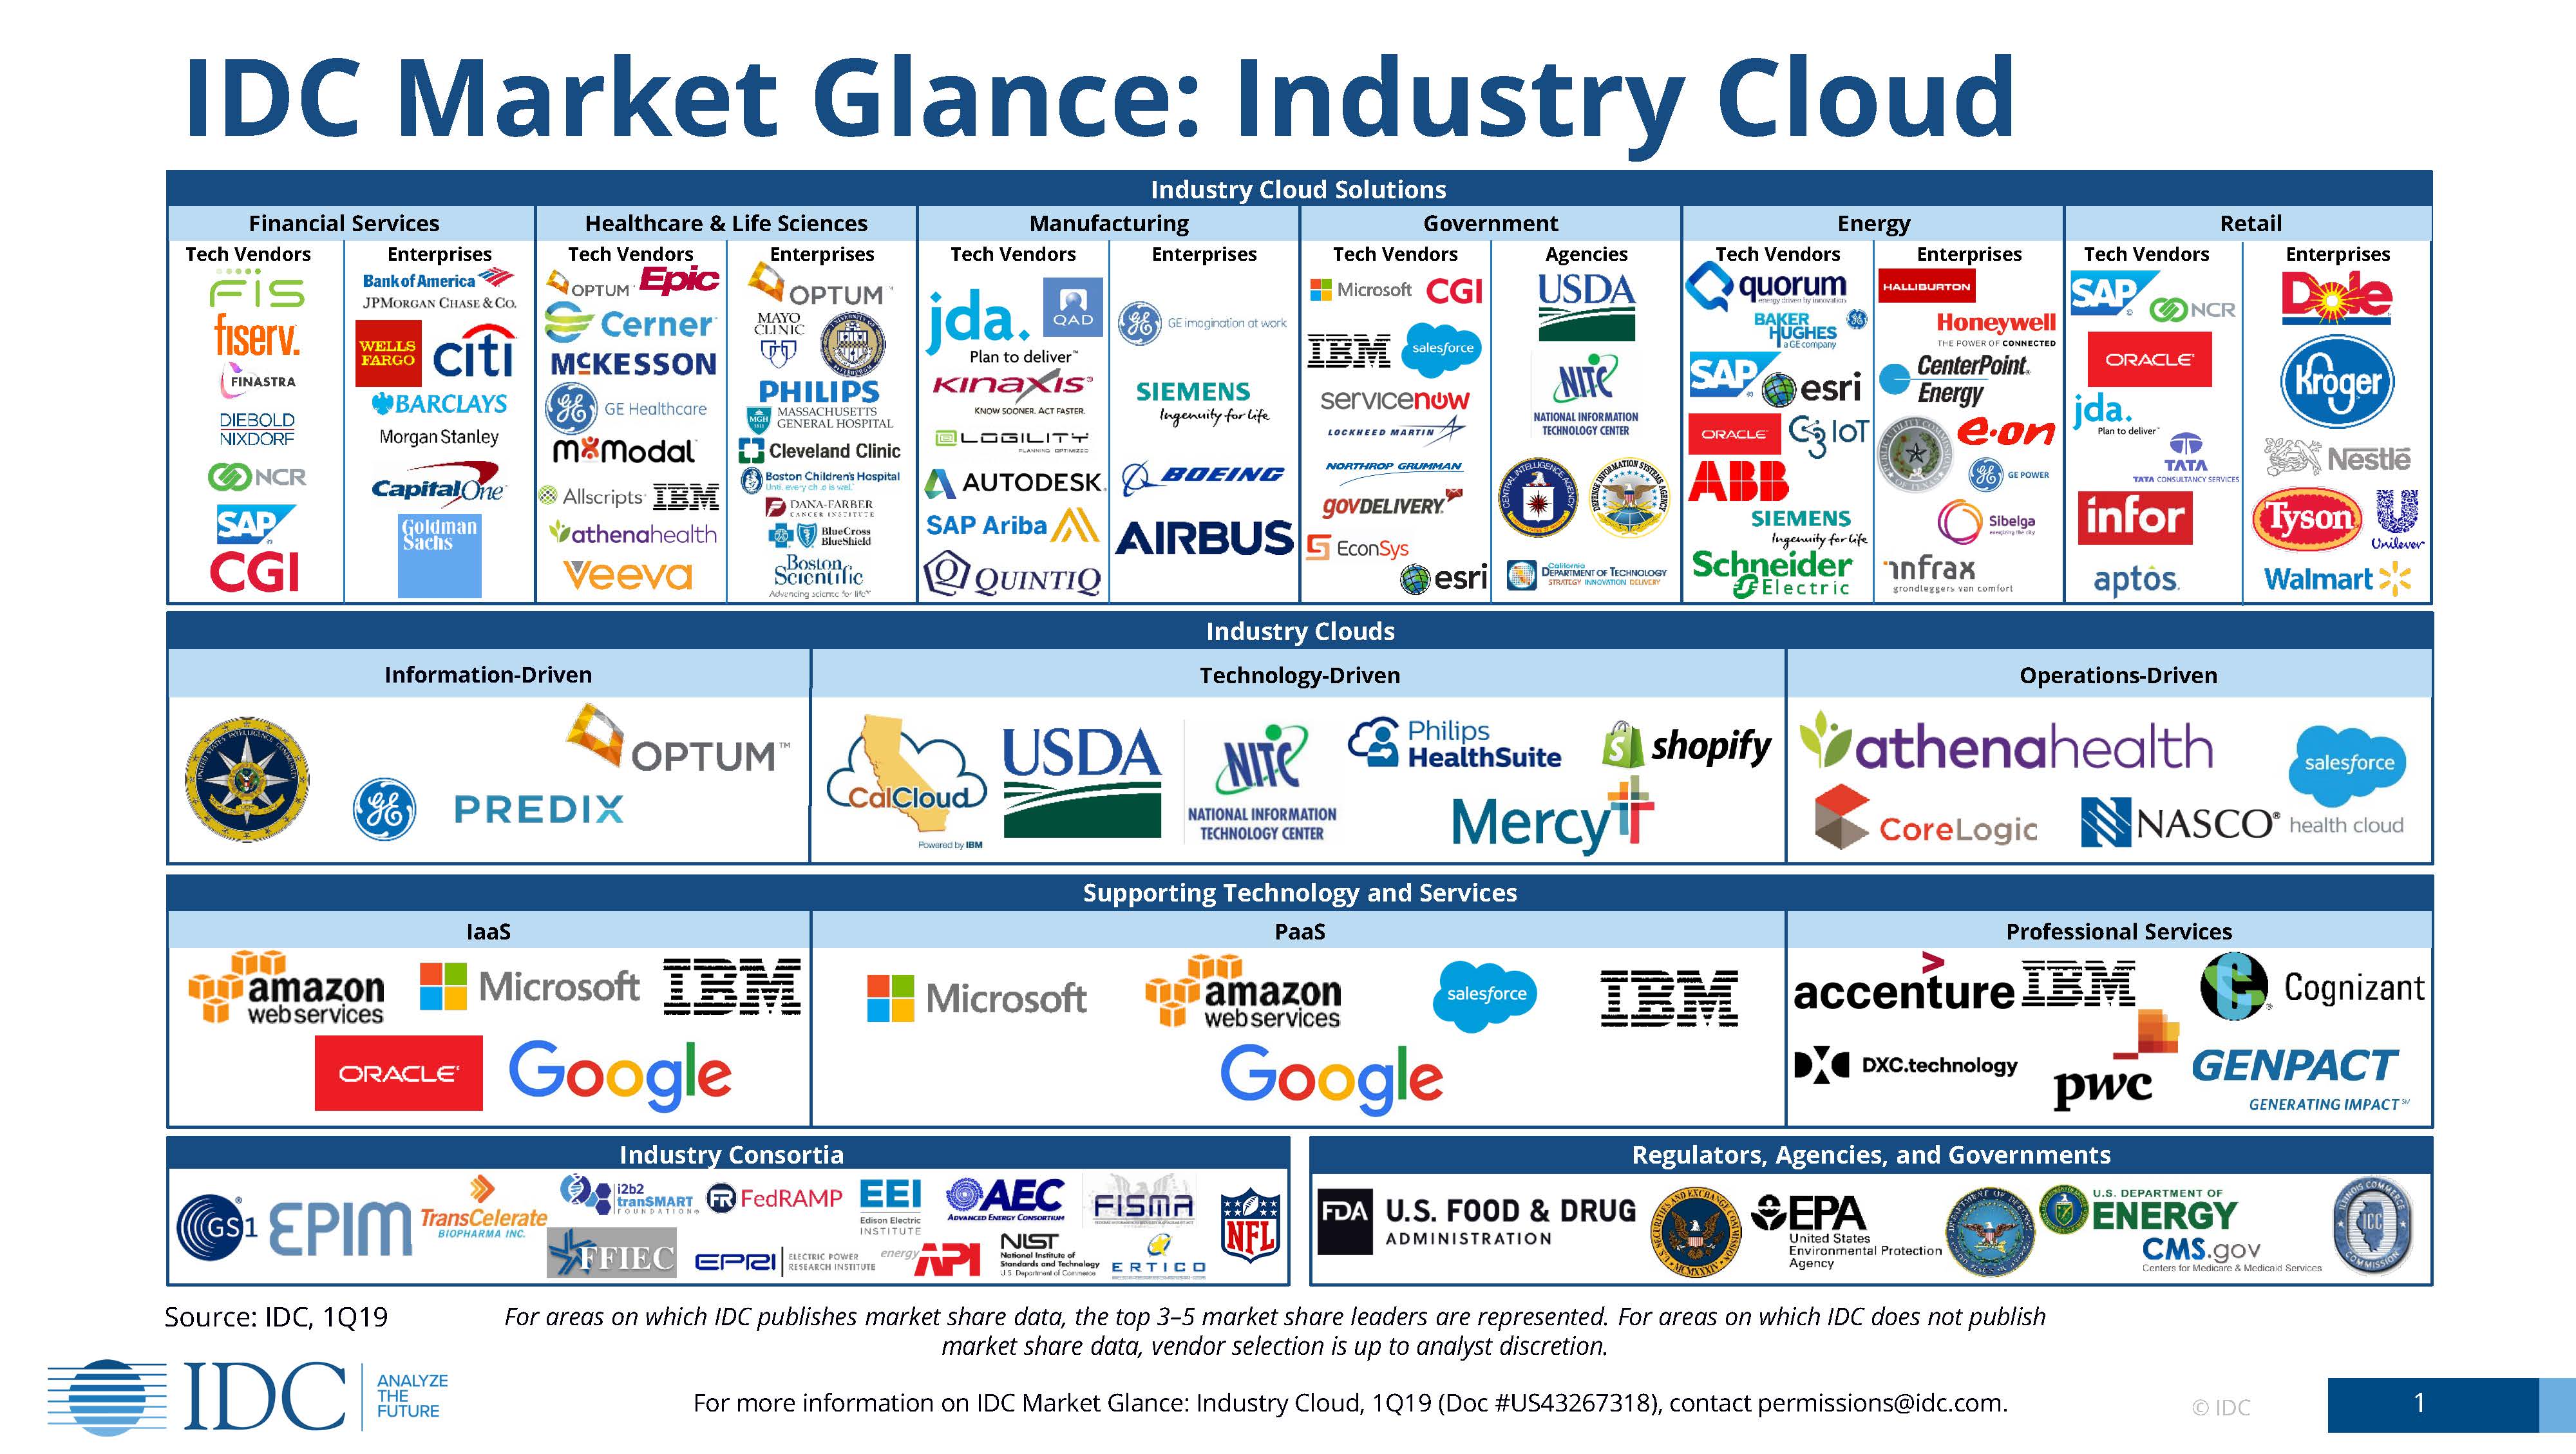 Industry Cloud Market Glance